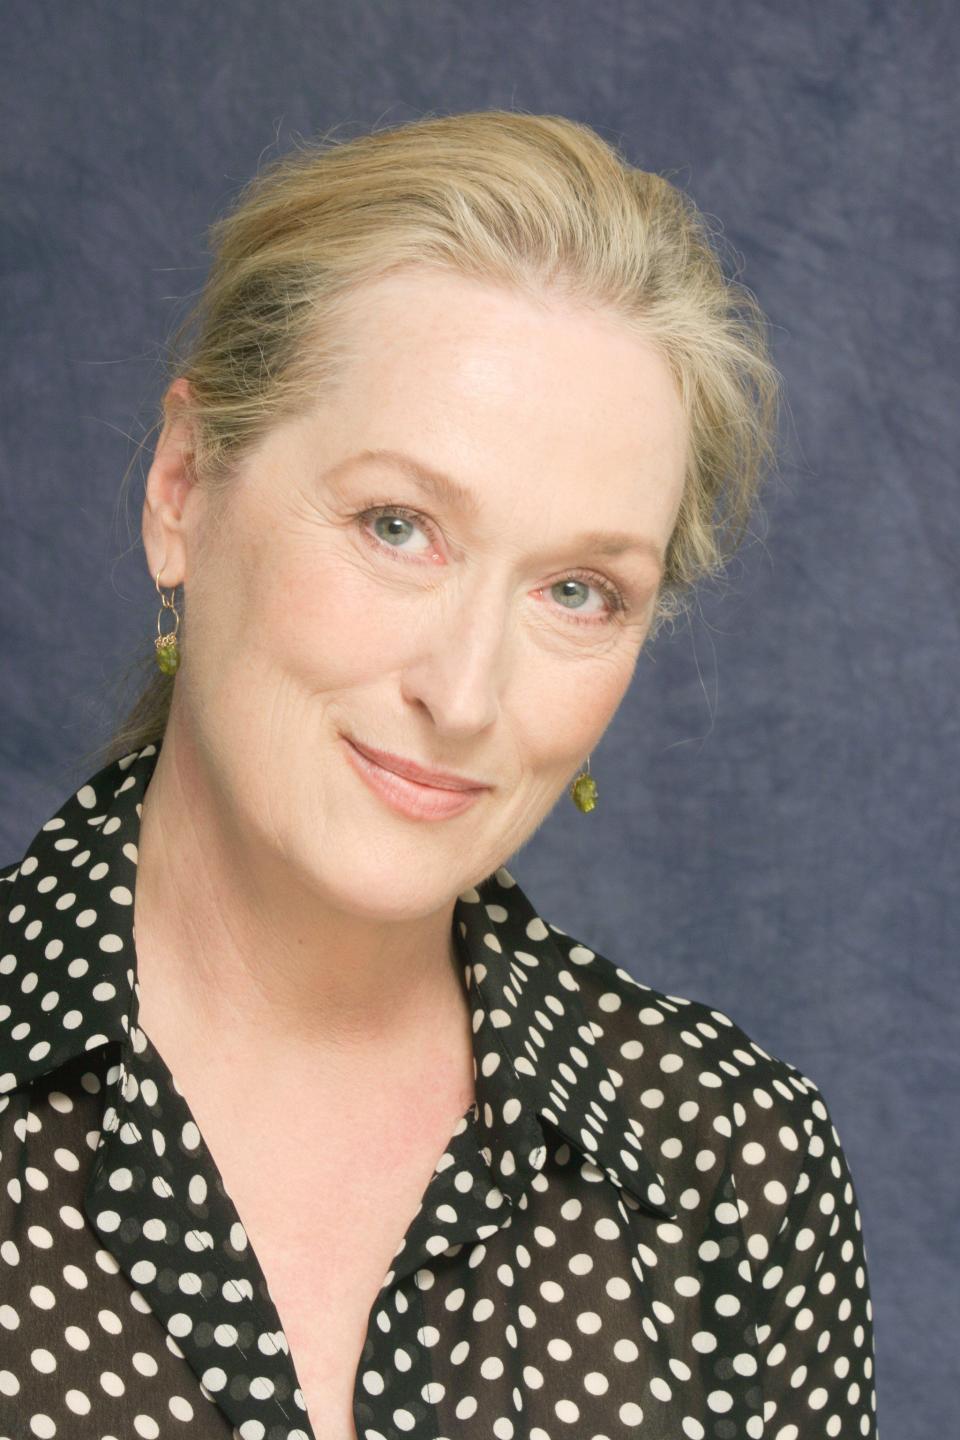 <h3>梅莉史翠普Meryl Streep - 亞薩學院Vassar College 戲劇學士/耶魯大學Yale University 戲劇碩士/ 達斯茅特學院Dartmouth College 榮譽博士</h3> <p>梅莉史翠普是3次奧斯卡及8次金球獎得主，被譽為「美國影史上最偉大的演員之一」，她的精湛演技人盡皆知，就連學位也高得嚇人！<strong>梅姨在紐約州的亞薩學院就讀時，她的戲劇教授就對她的口音模仿能力及快速熟記台詞的態度讚譽有加。</strong></p> <p>1971年大學畢業後，她繼續前往耶魯大學戲劇學院攻讀碩士，而龐大的學貸及工作壓力曾讓她一度放棄演戲，所幸她仍堅持完成學業取得碩士學位。1970年，梅姨以亞薩學院交換生身份作為訪問學者前往達斯茅特學院（Dartmouth College），最後於1981年取得榮譽博士學位。</p> <cite>Getty Images</cite>